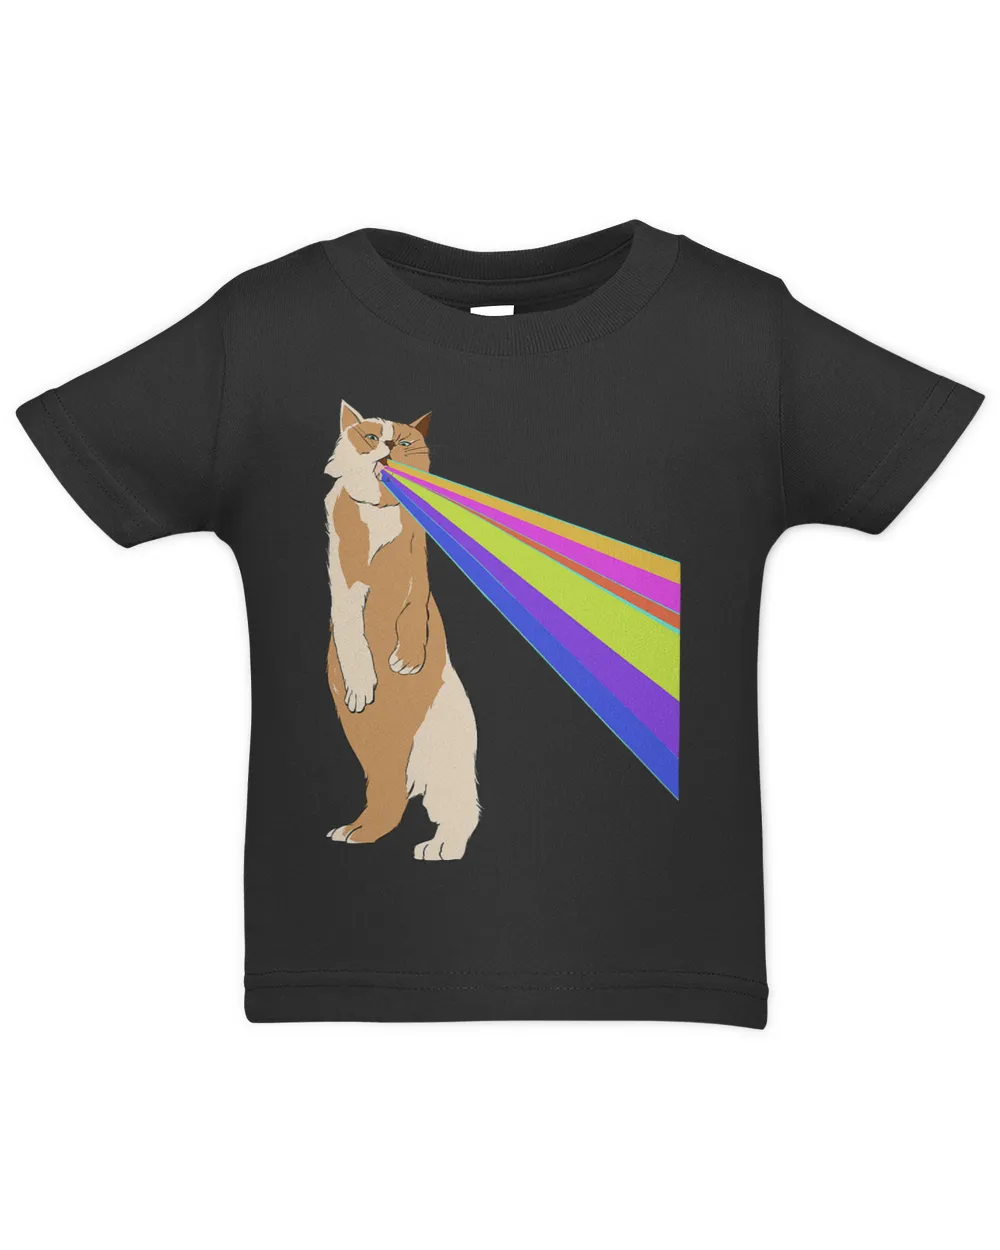 Kitty Cat Shooting Rainbow Laser Beam Funny